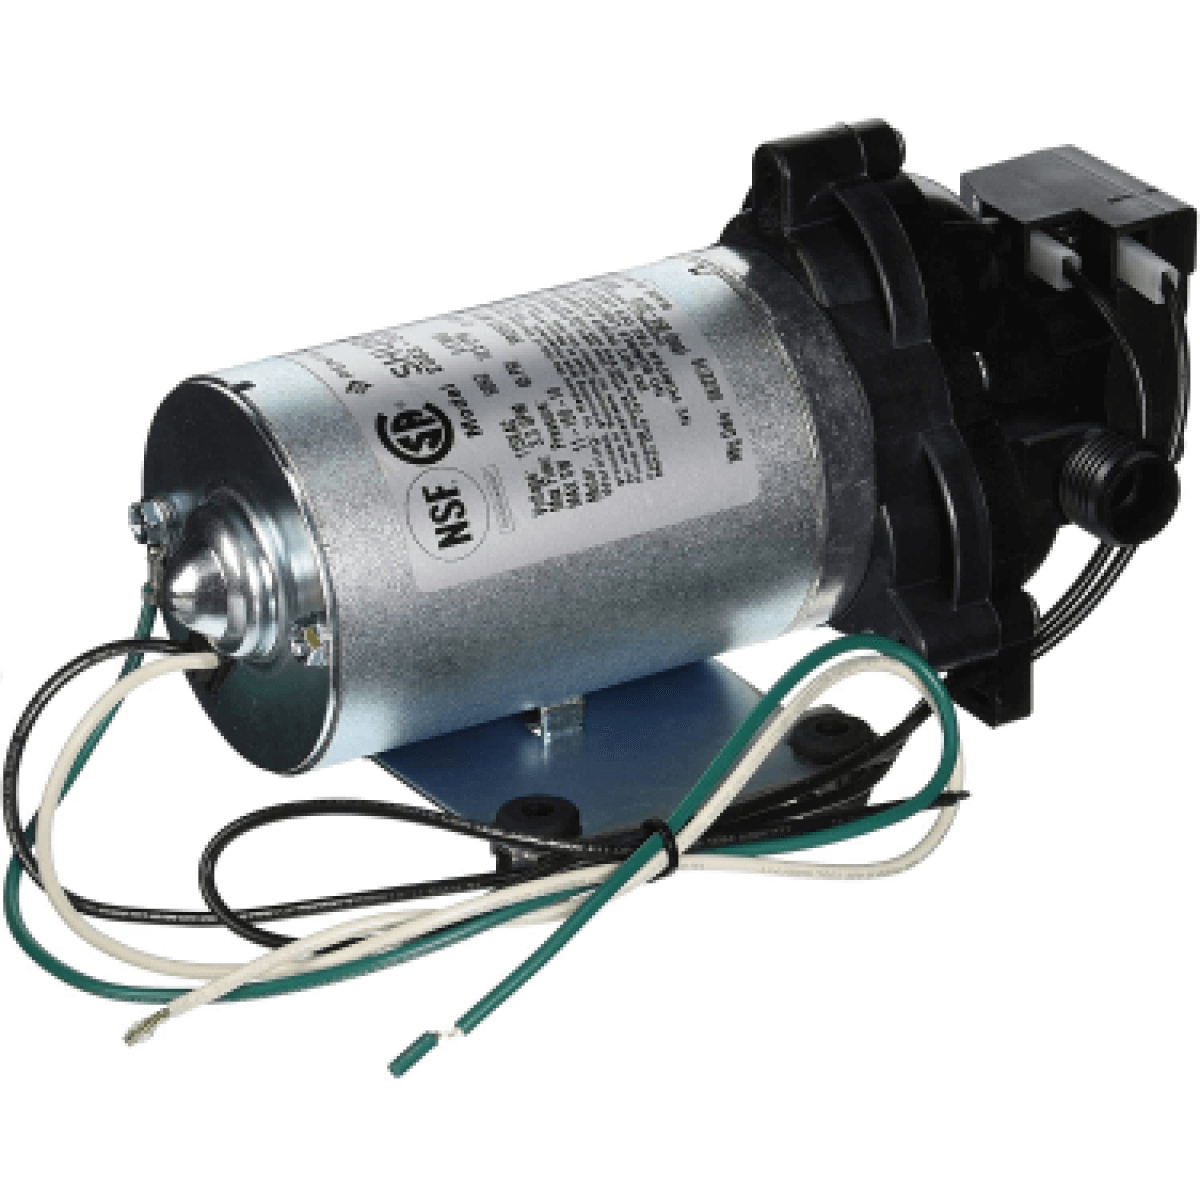 SHURflo 2088-594-154 Industrial Pump 198GPH, 115V, 1/2"